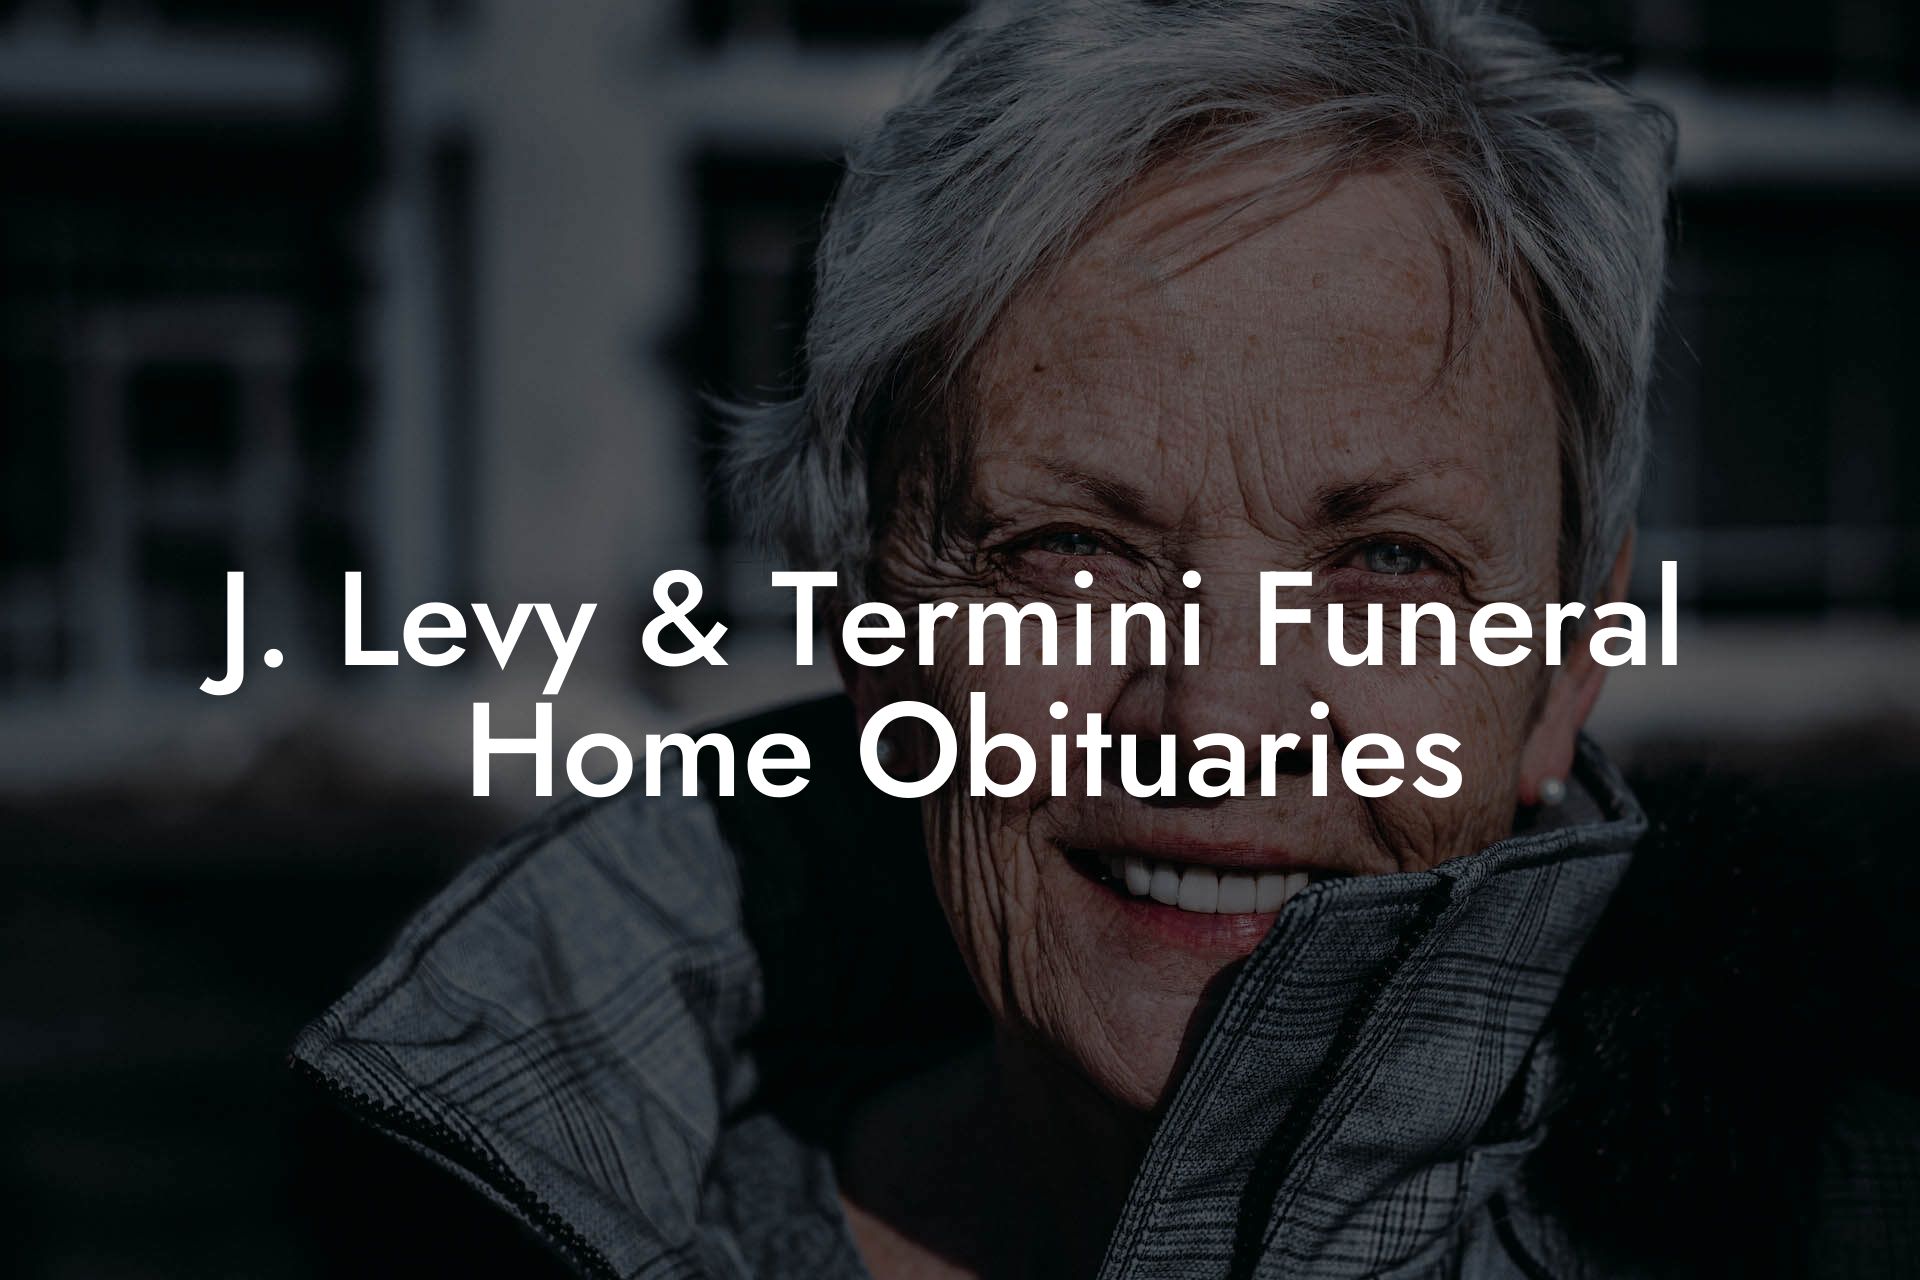 J. Levy & Termini Funeral Home Obituaries